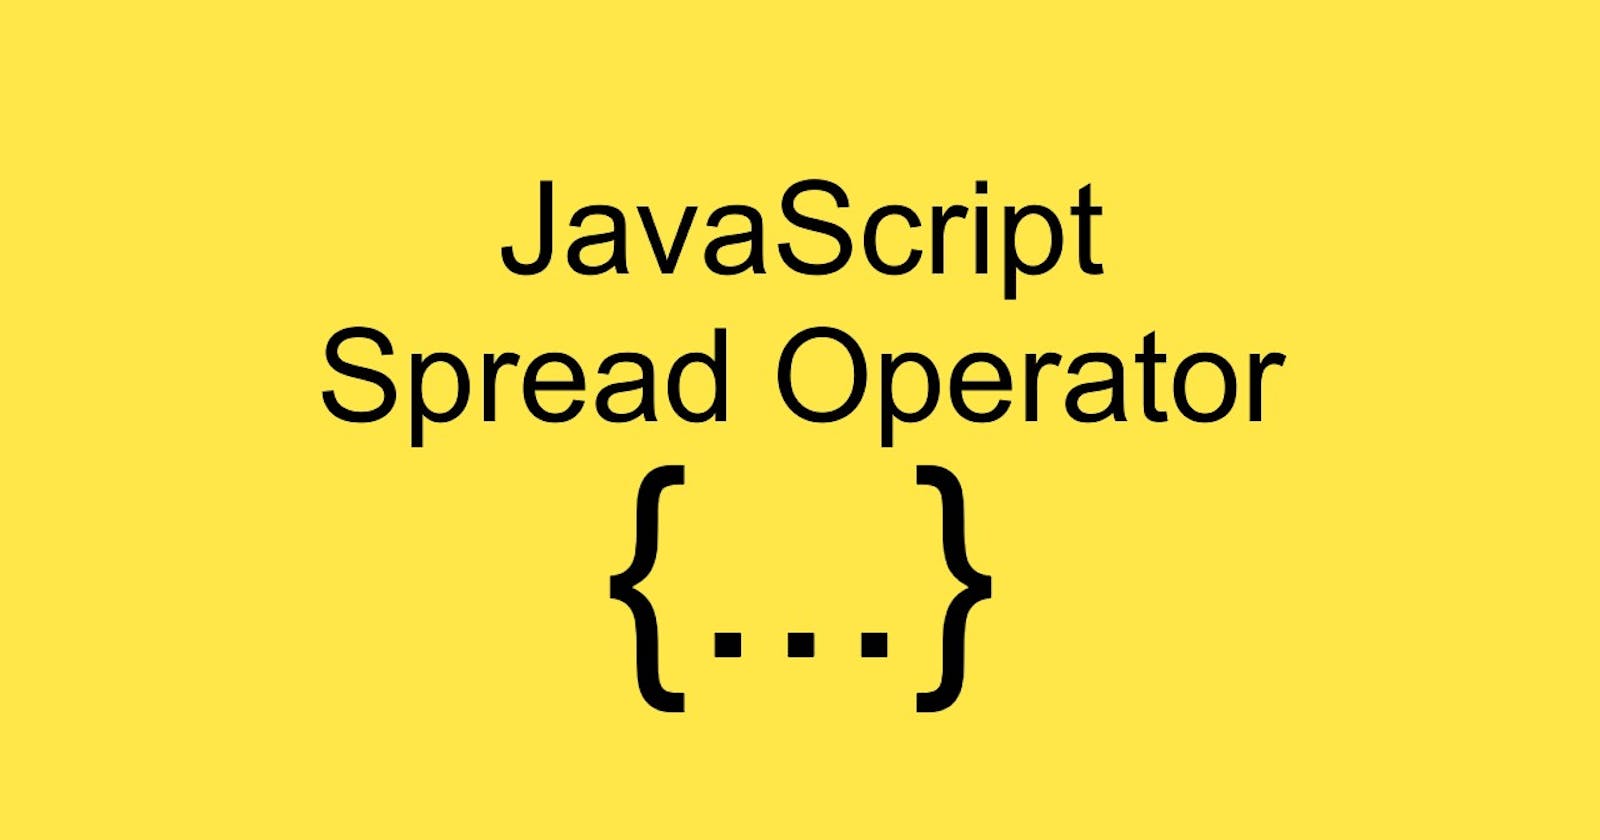 The Spread Operator in Javascript.